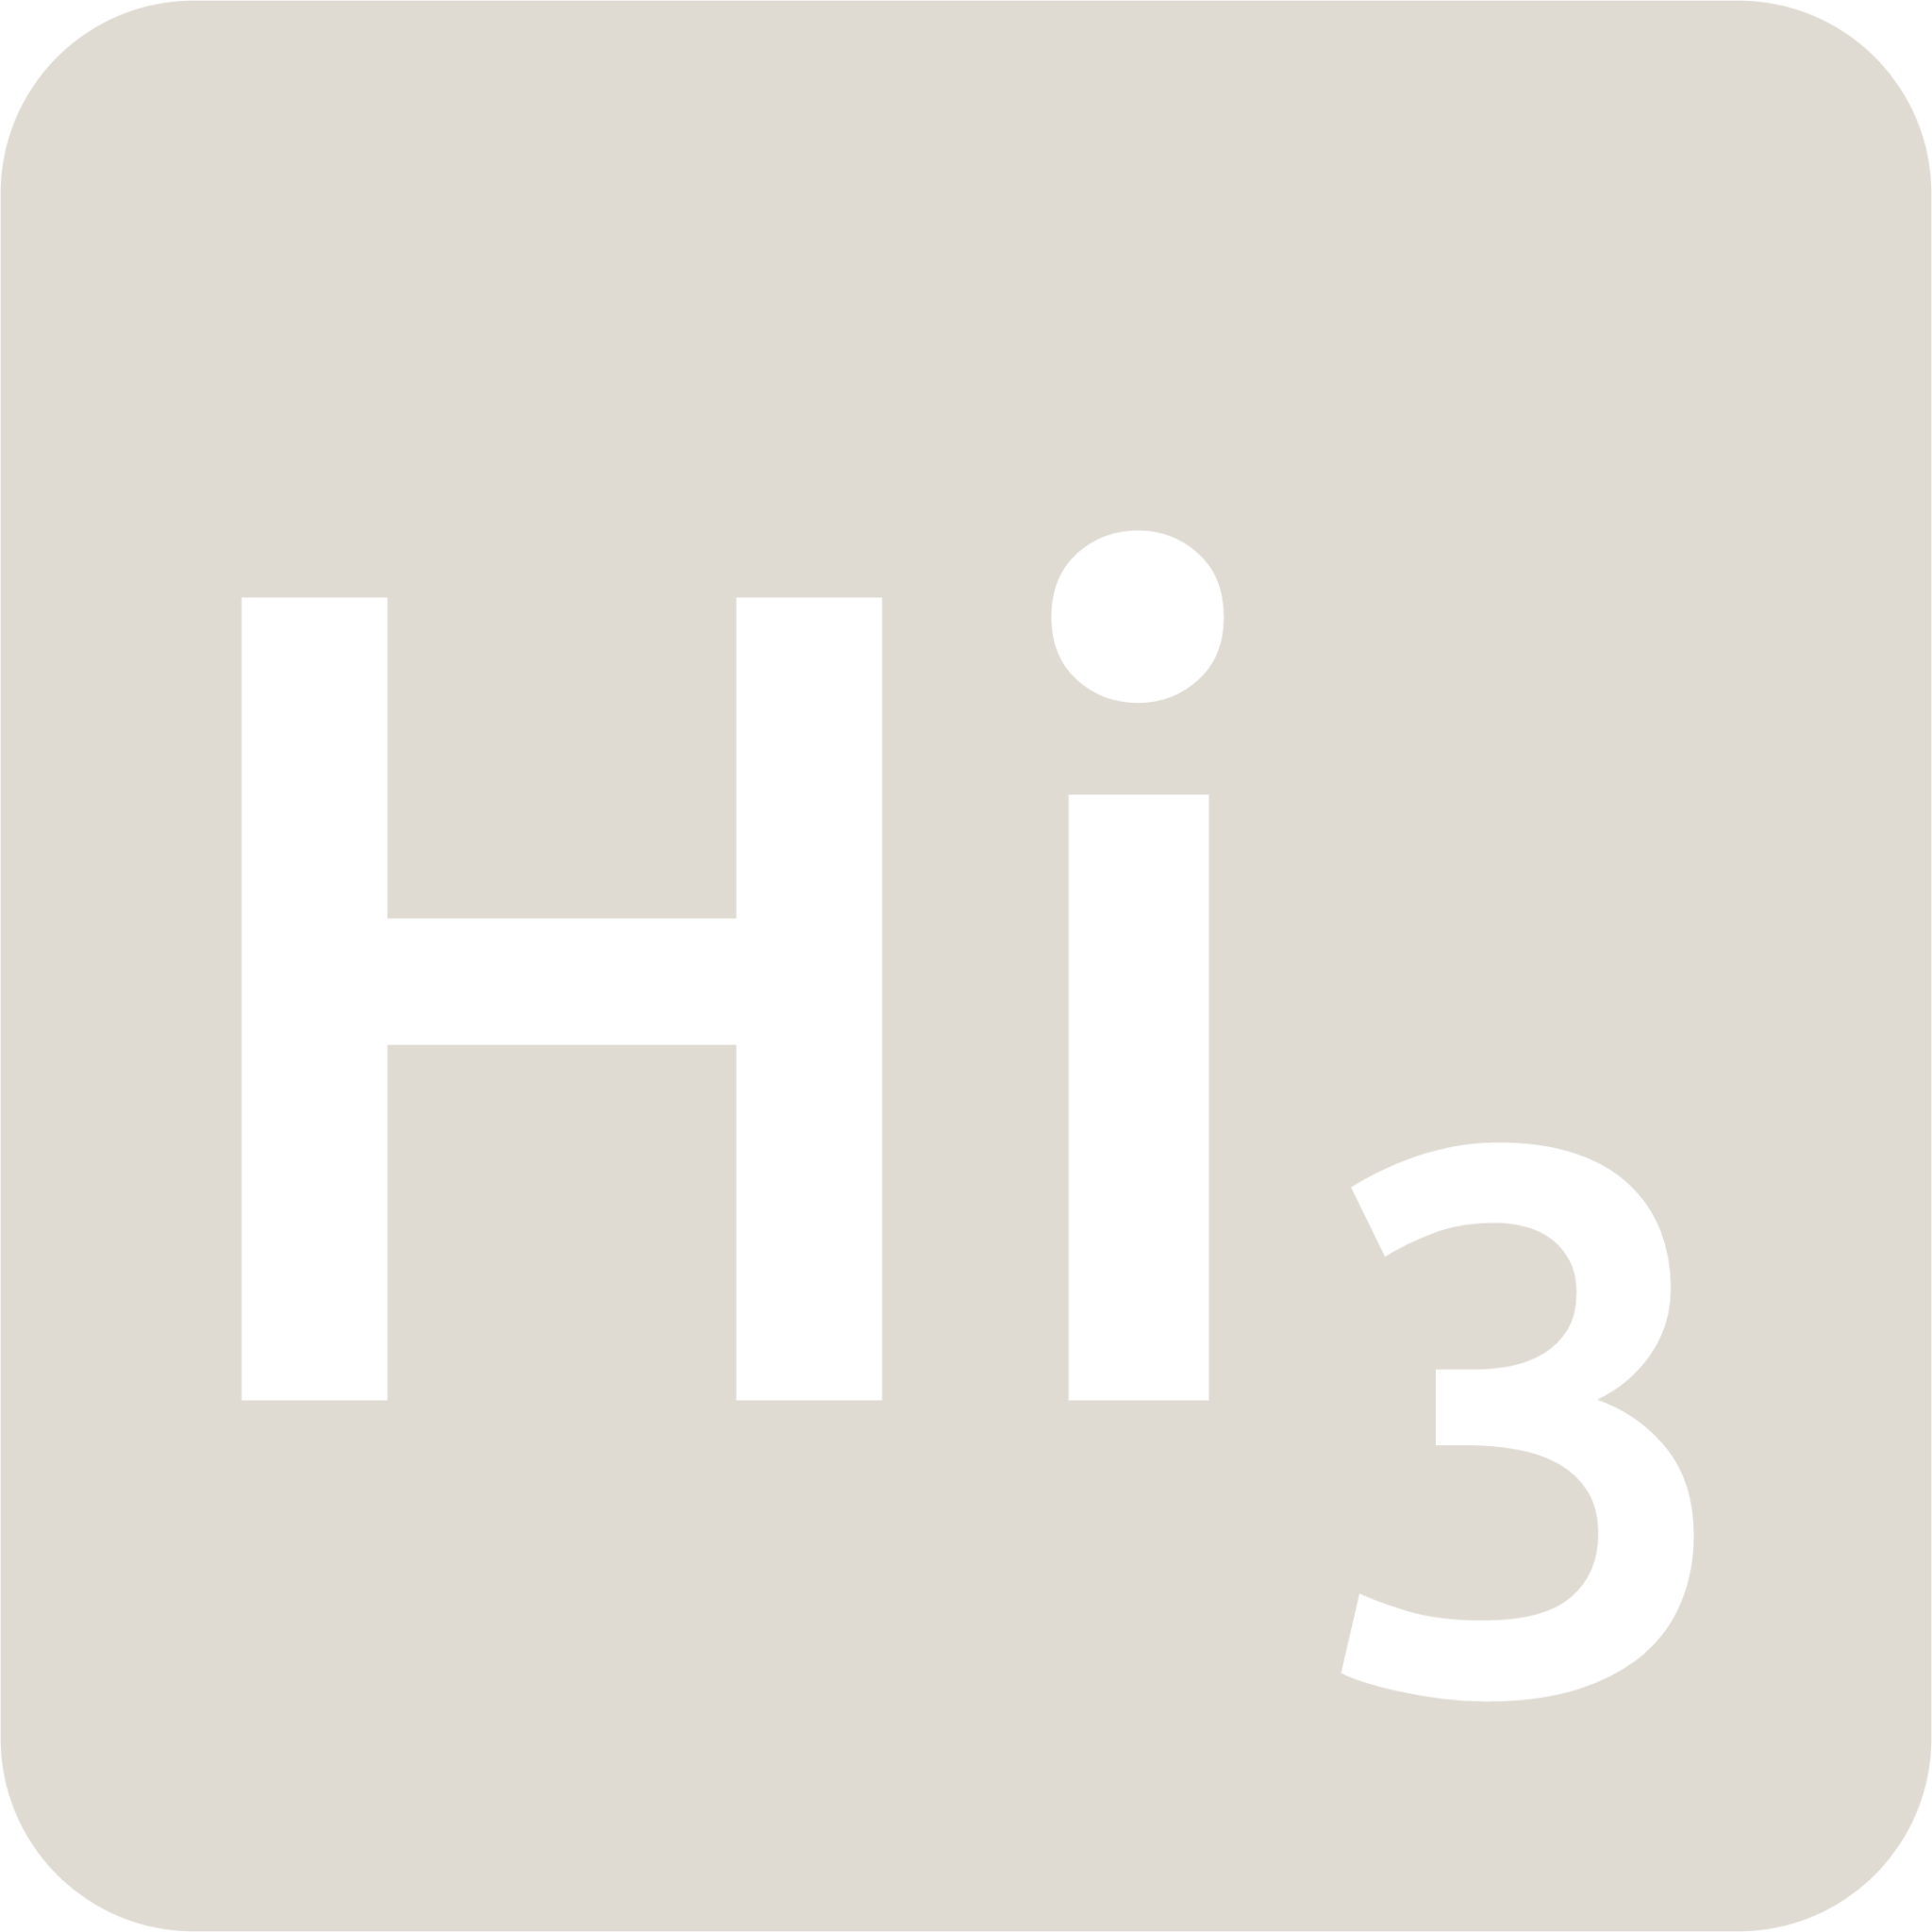 indicator keyboard Hi 3 icon